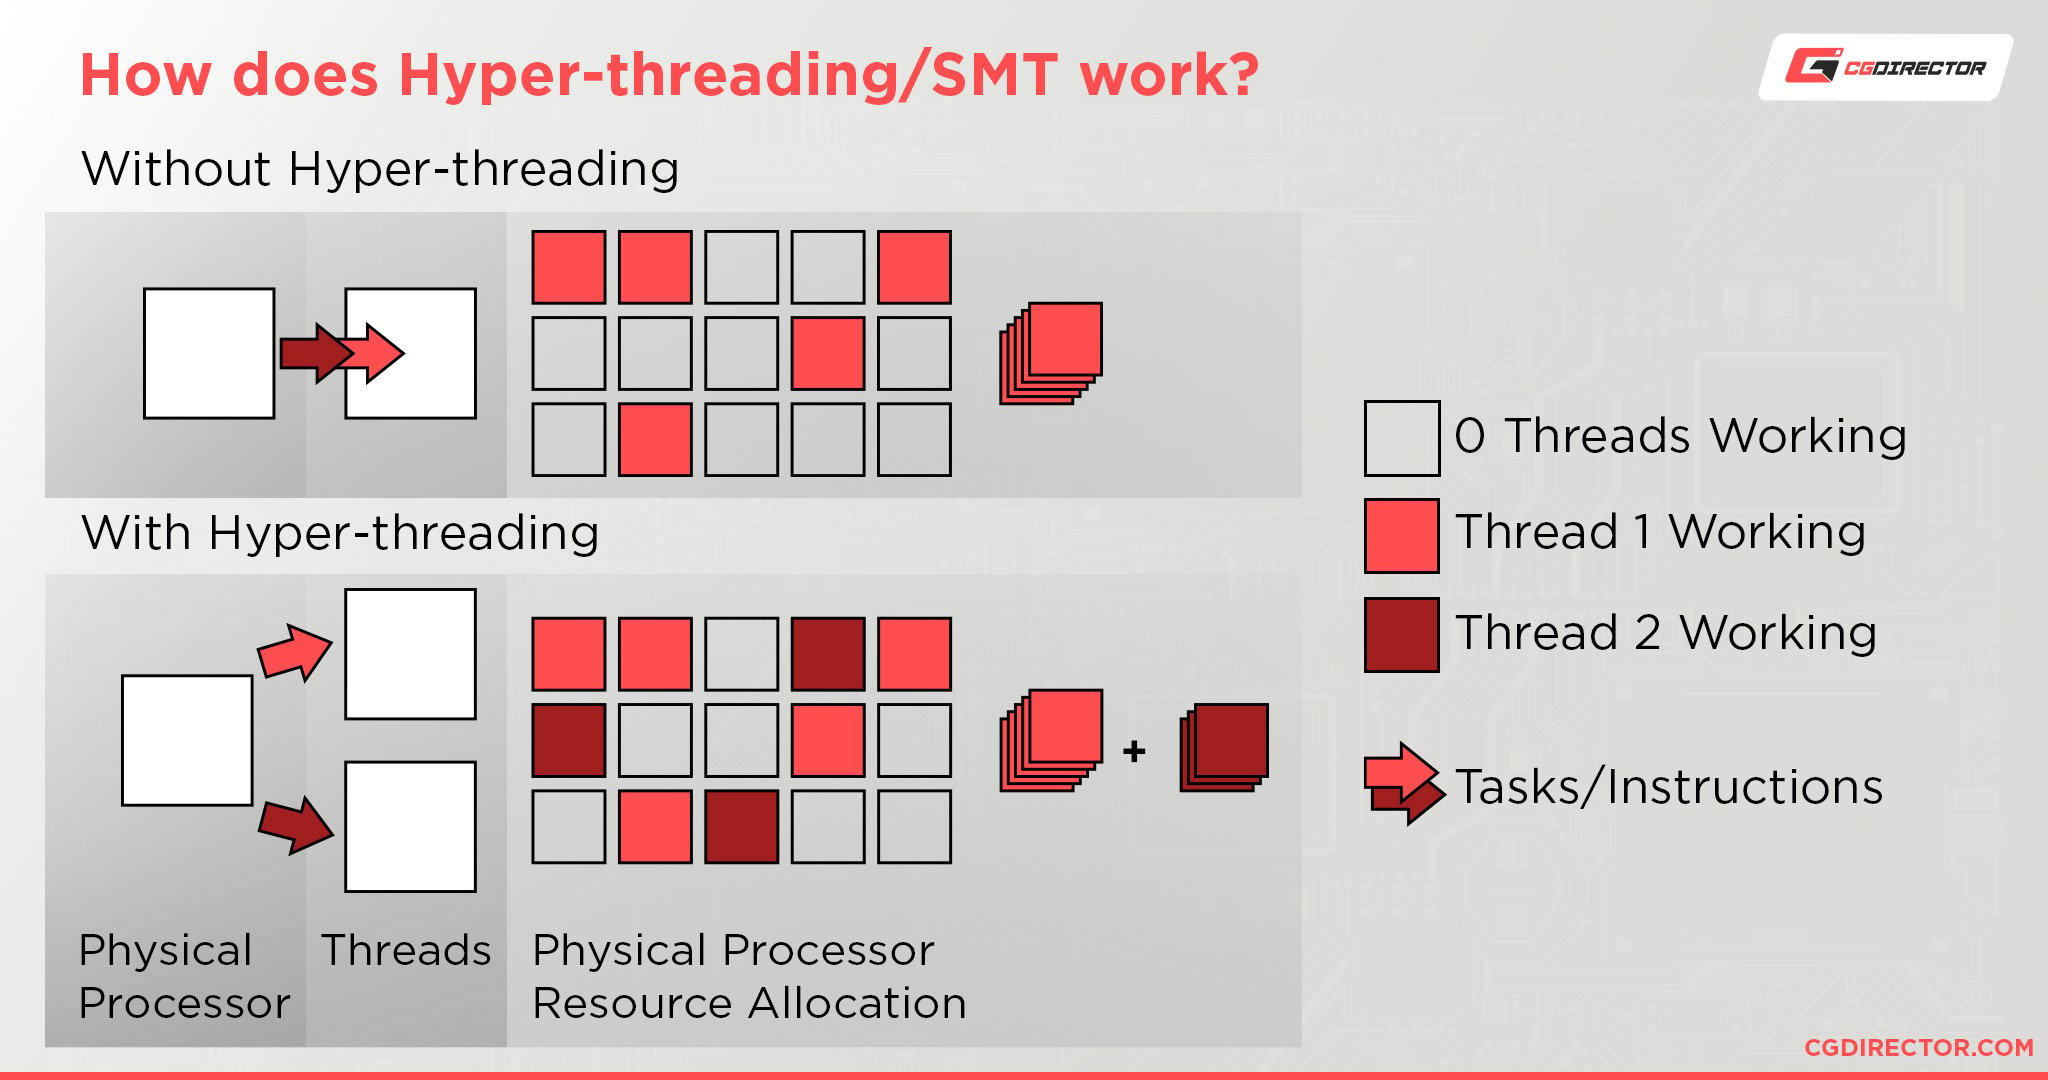 How does Hyper-threading work